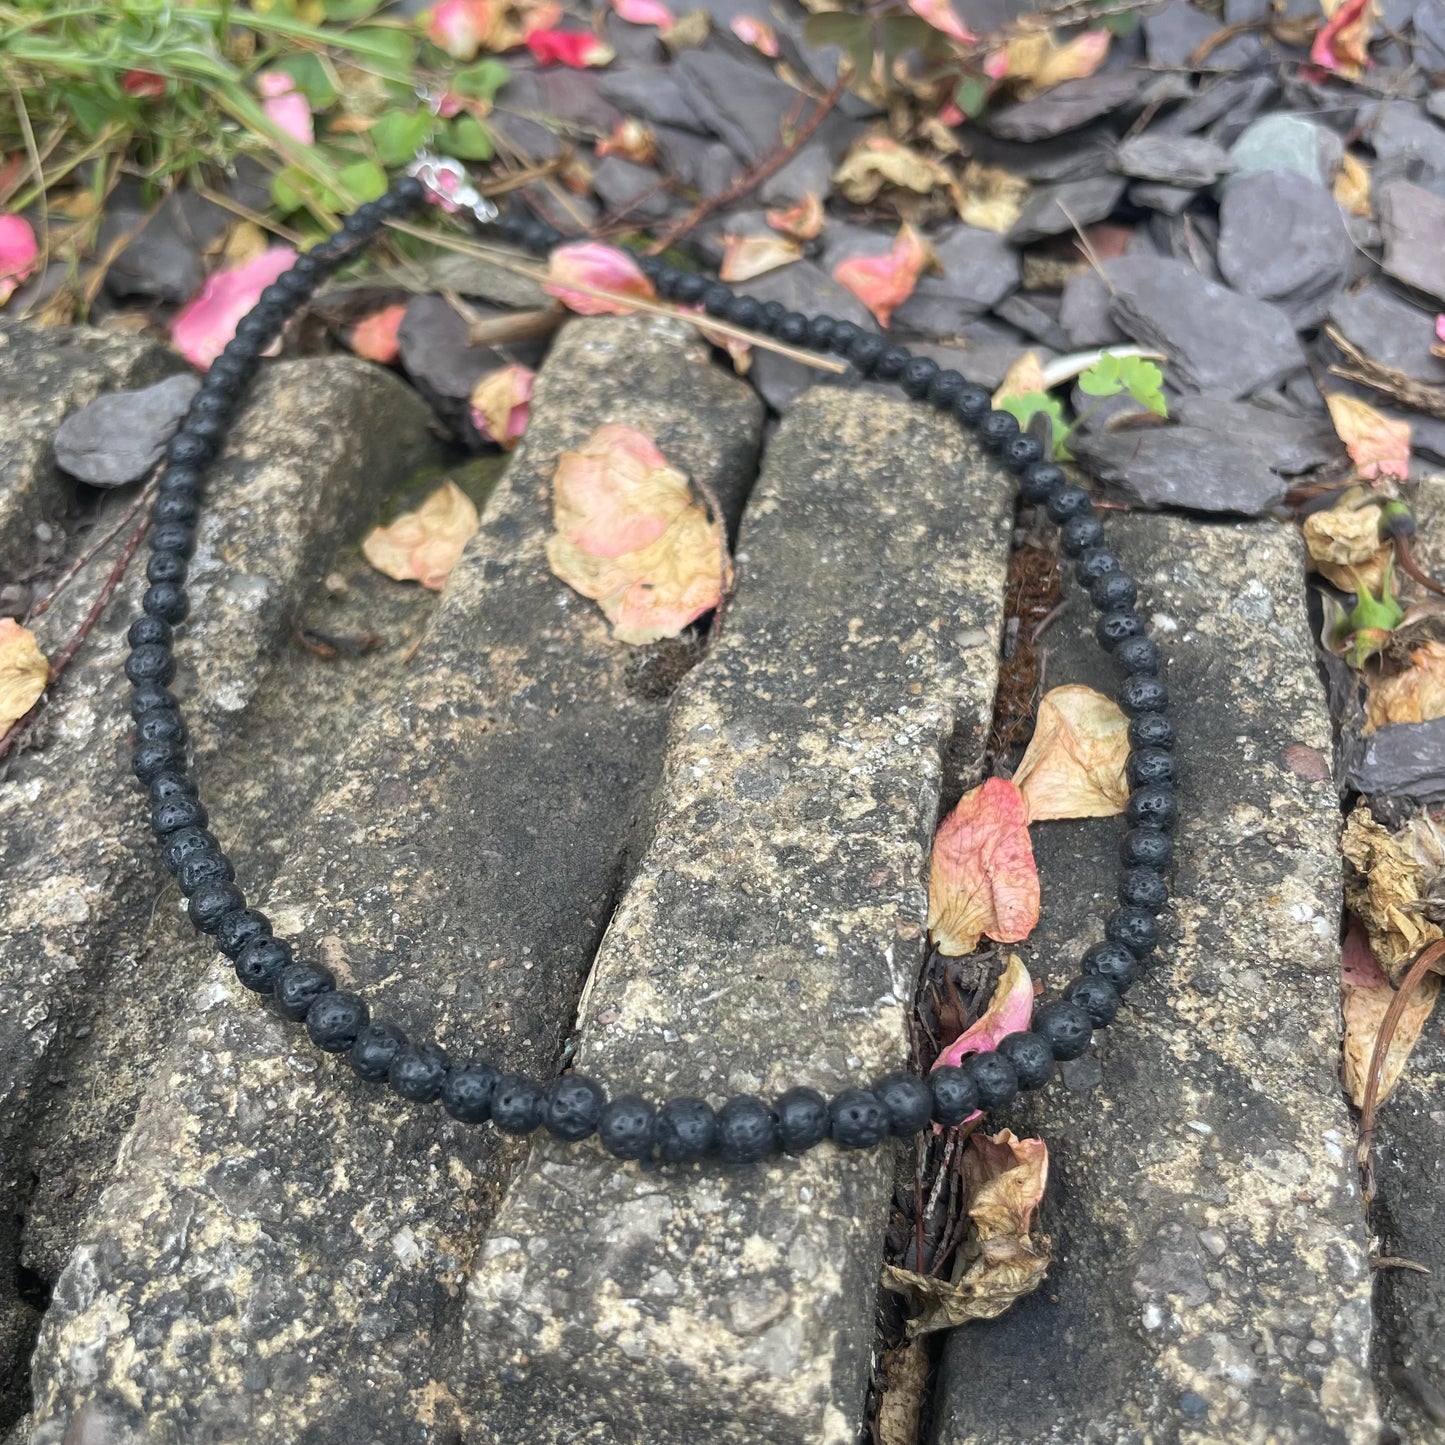 Lava Stone Bead Choker Necklace